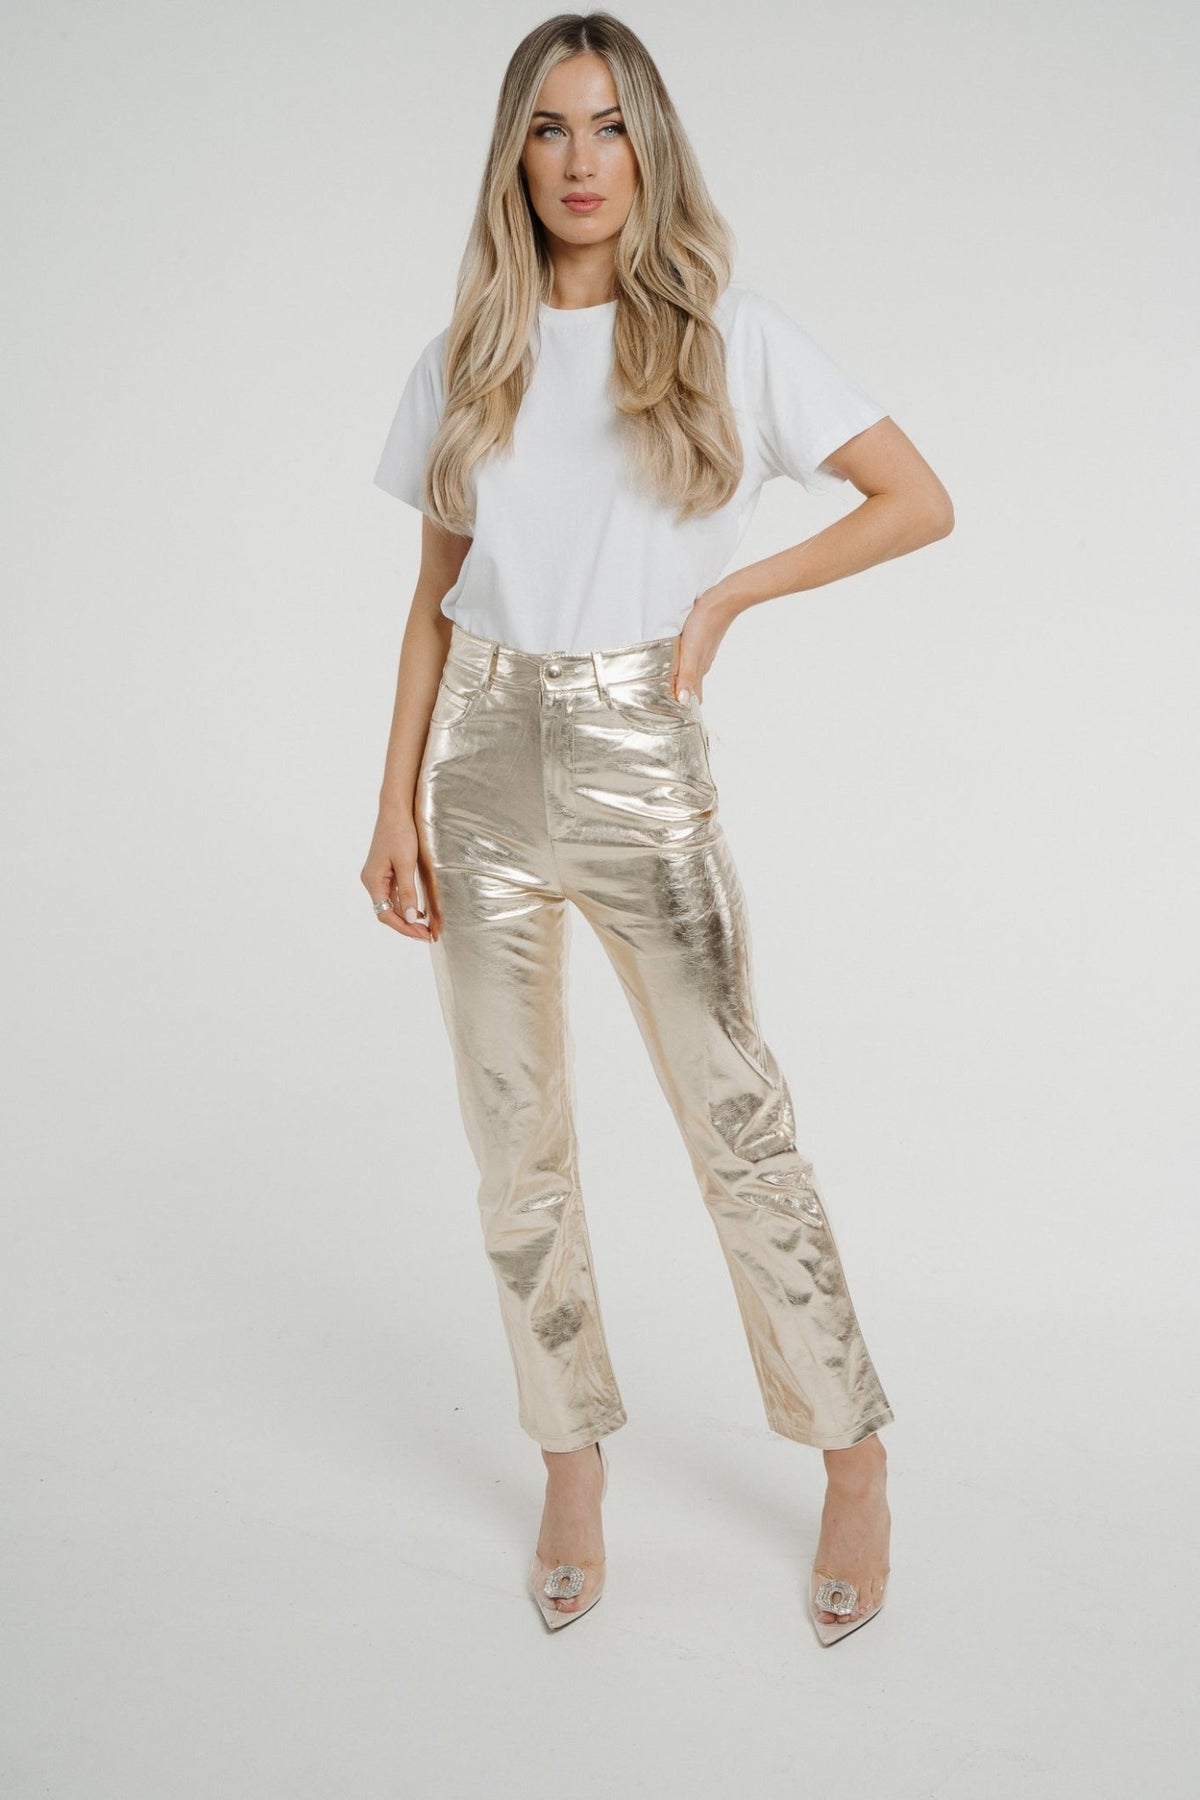 Daisy Metallic Trousers In Gold - The Walk in Wardrobe